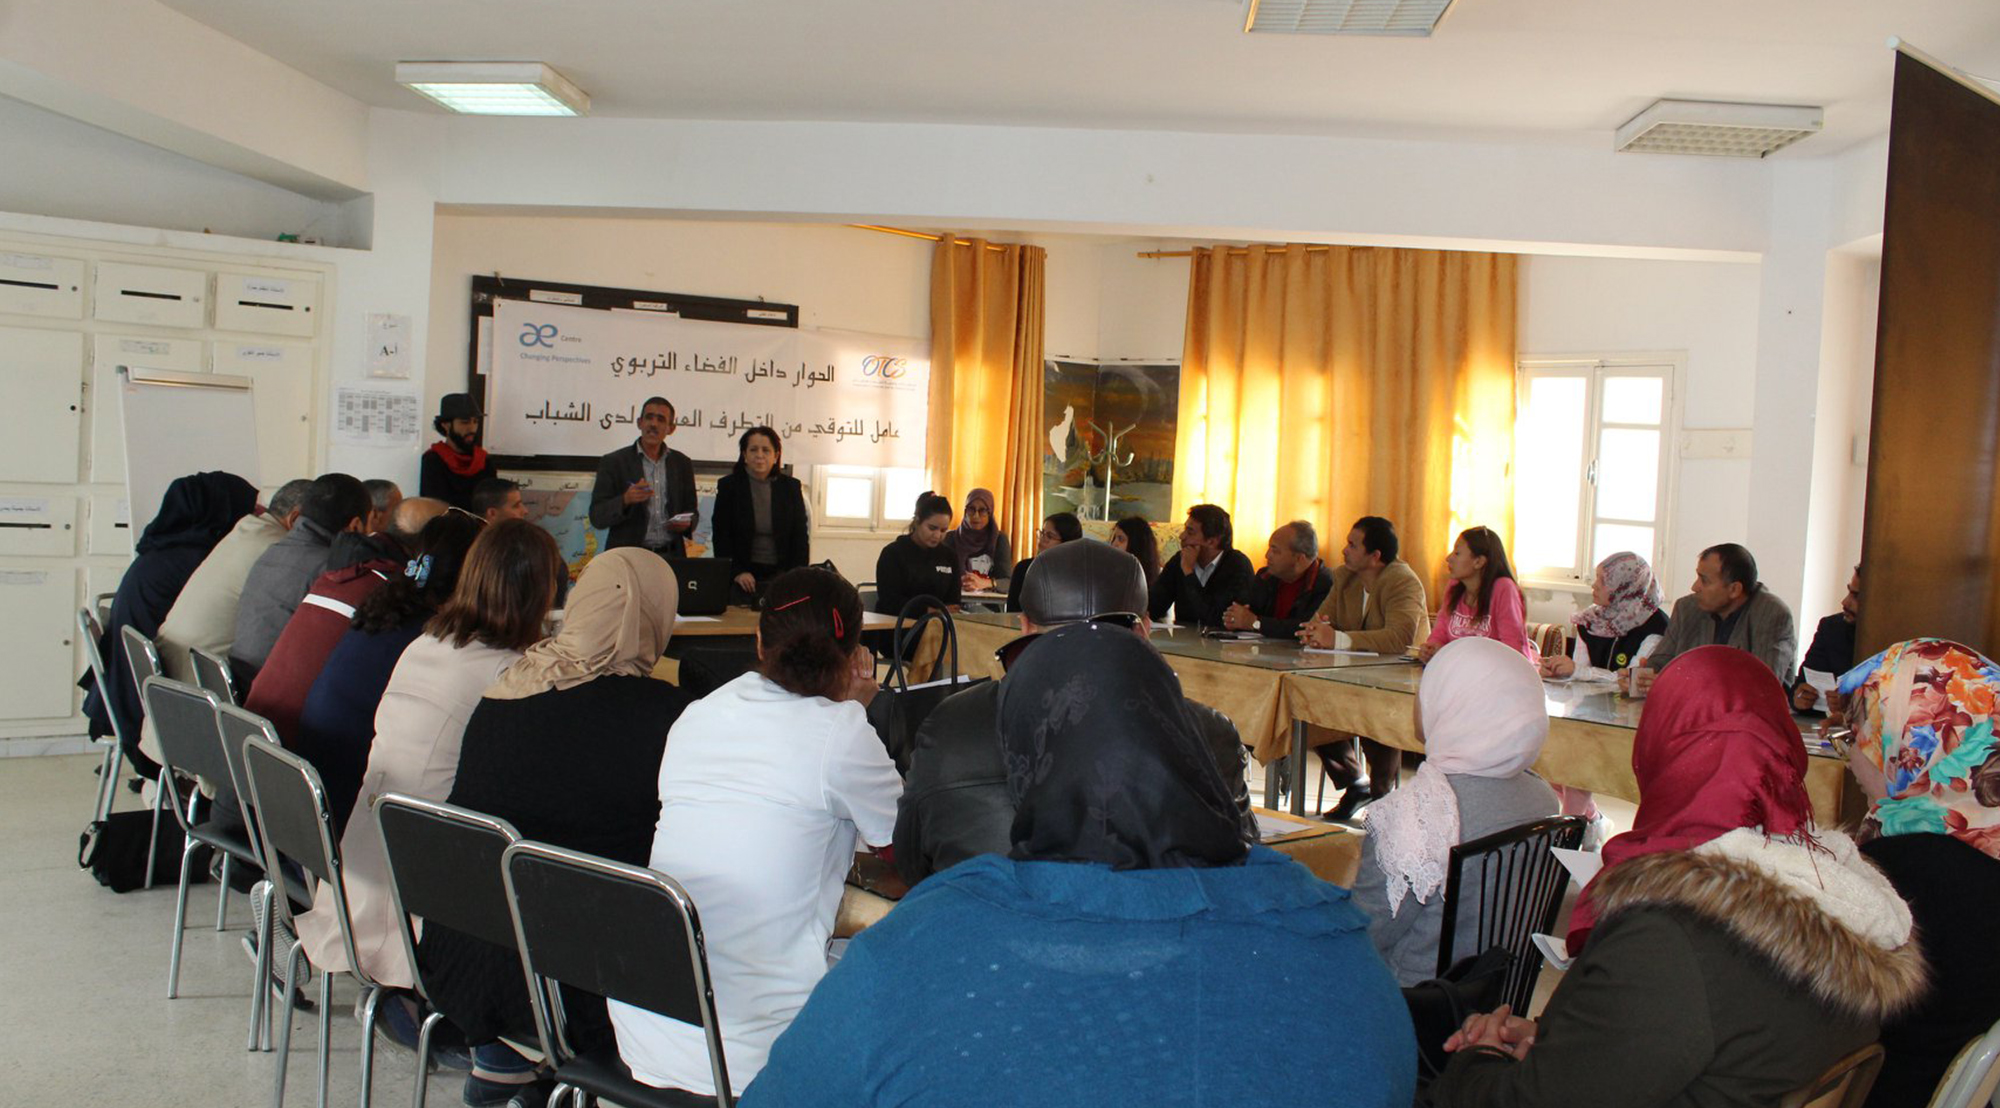 Dialog in the education space in Sidi Hassine, Tunisia